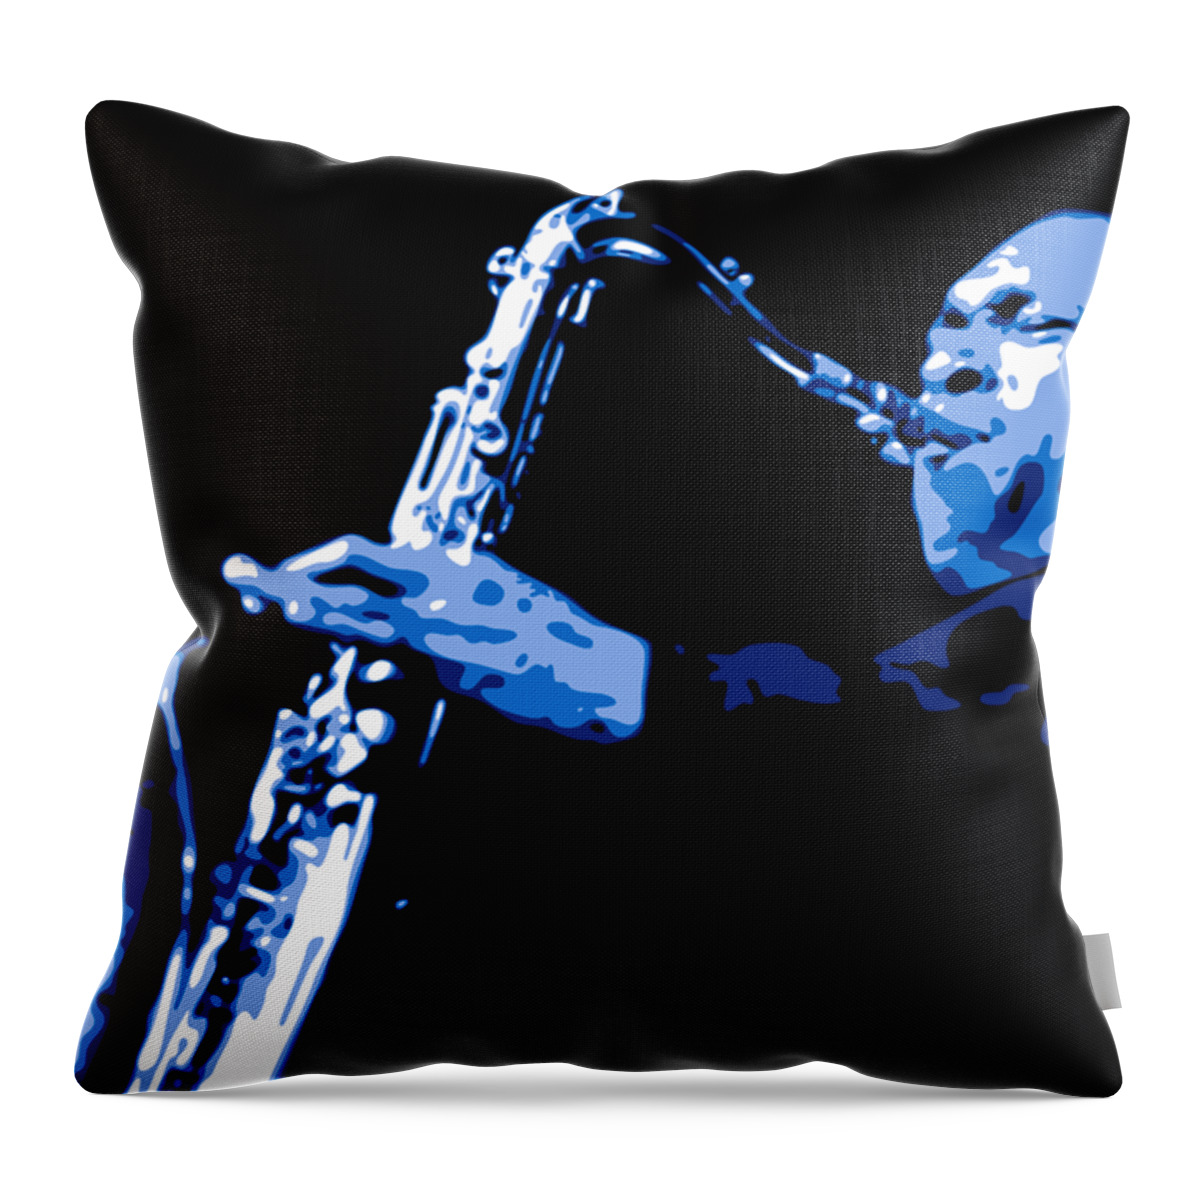 John Coltrane Throw Pillow featuring the digital art John Coltrane by DB Artist